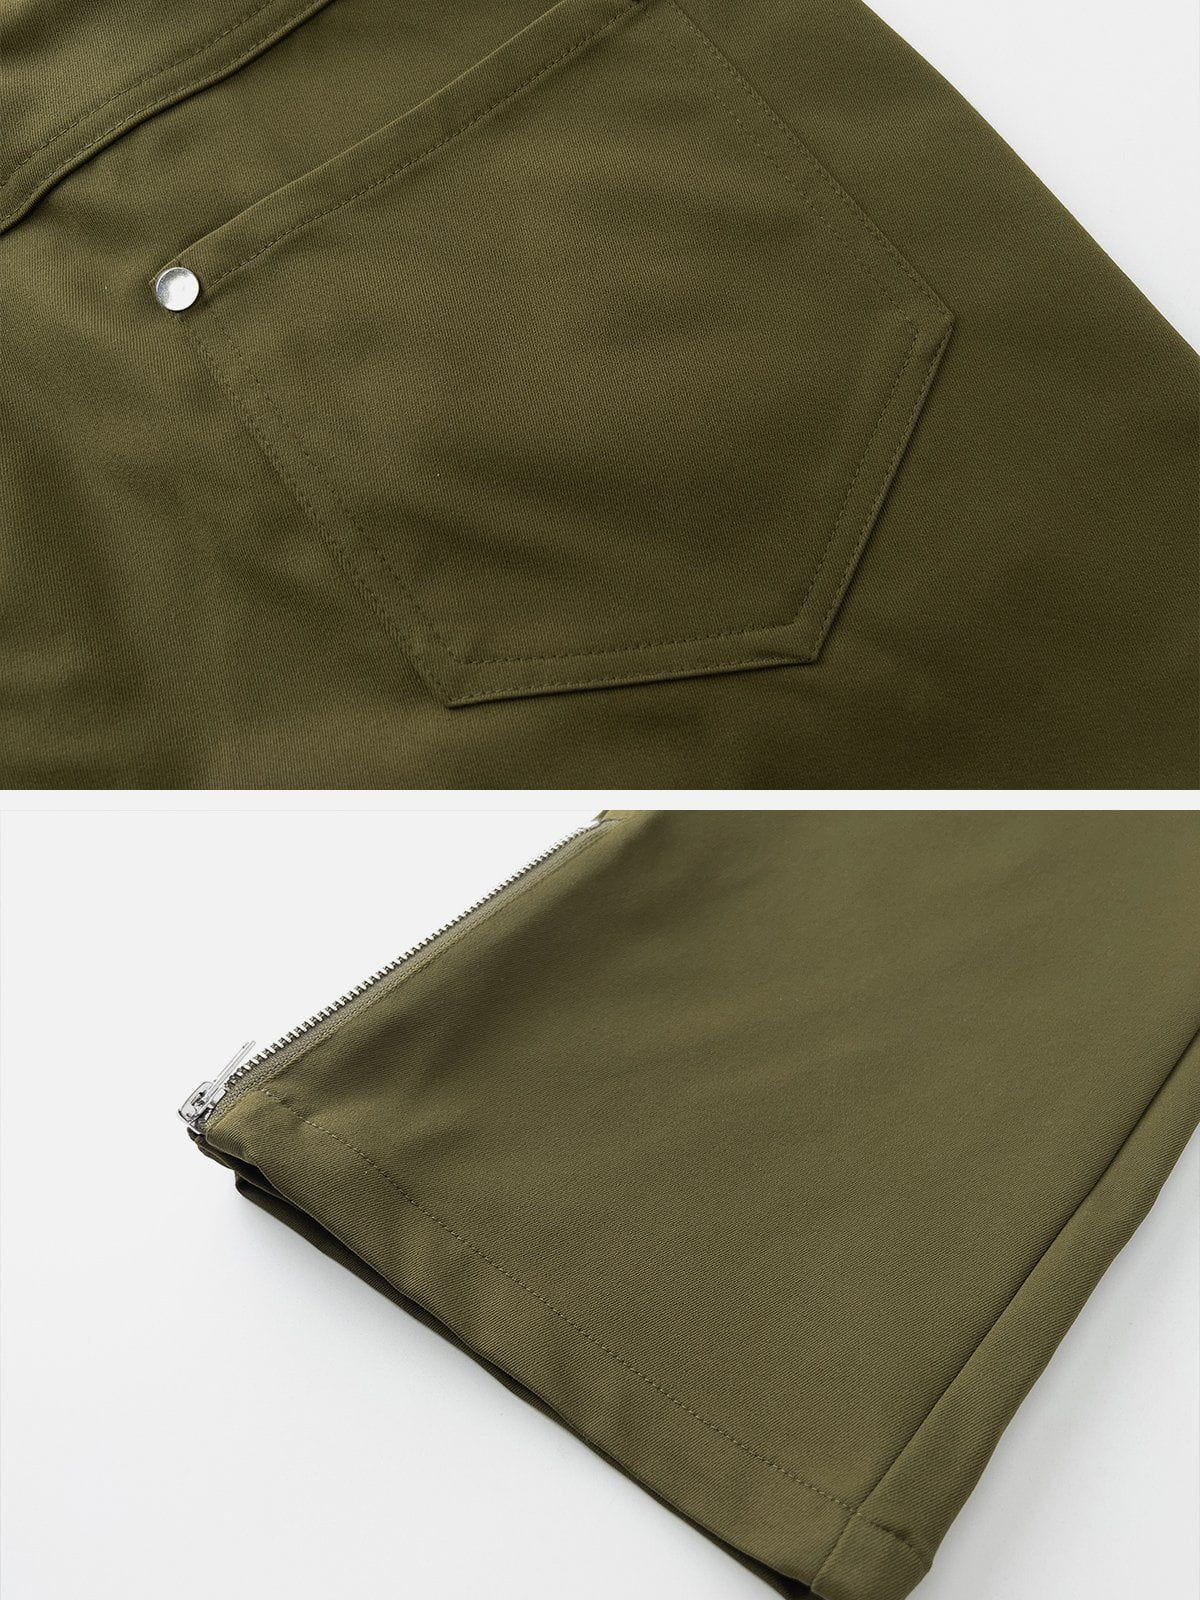 Sneakerland® - Multiple Pockets Zipper Cargo Pants